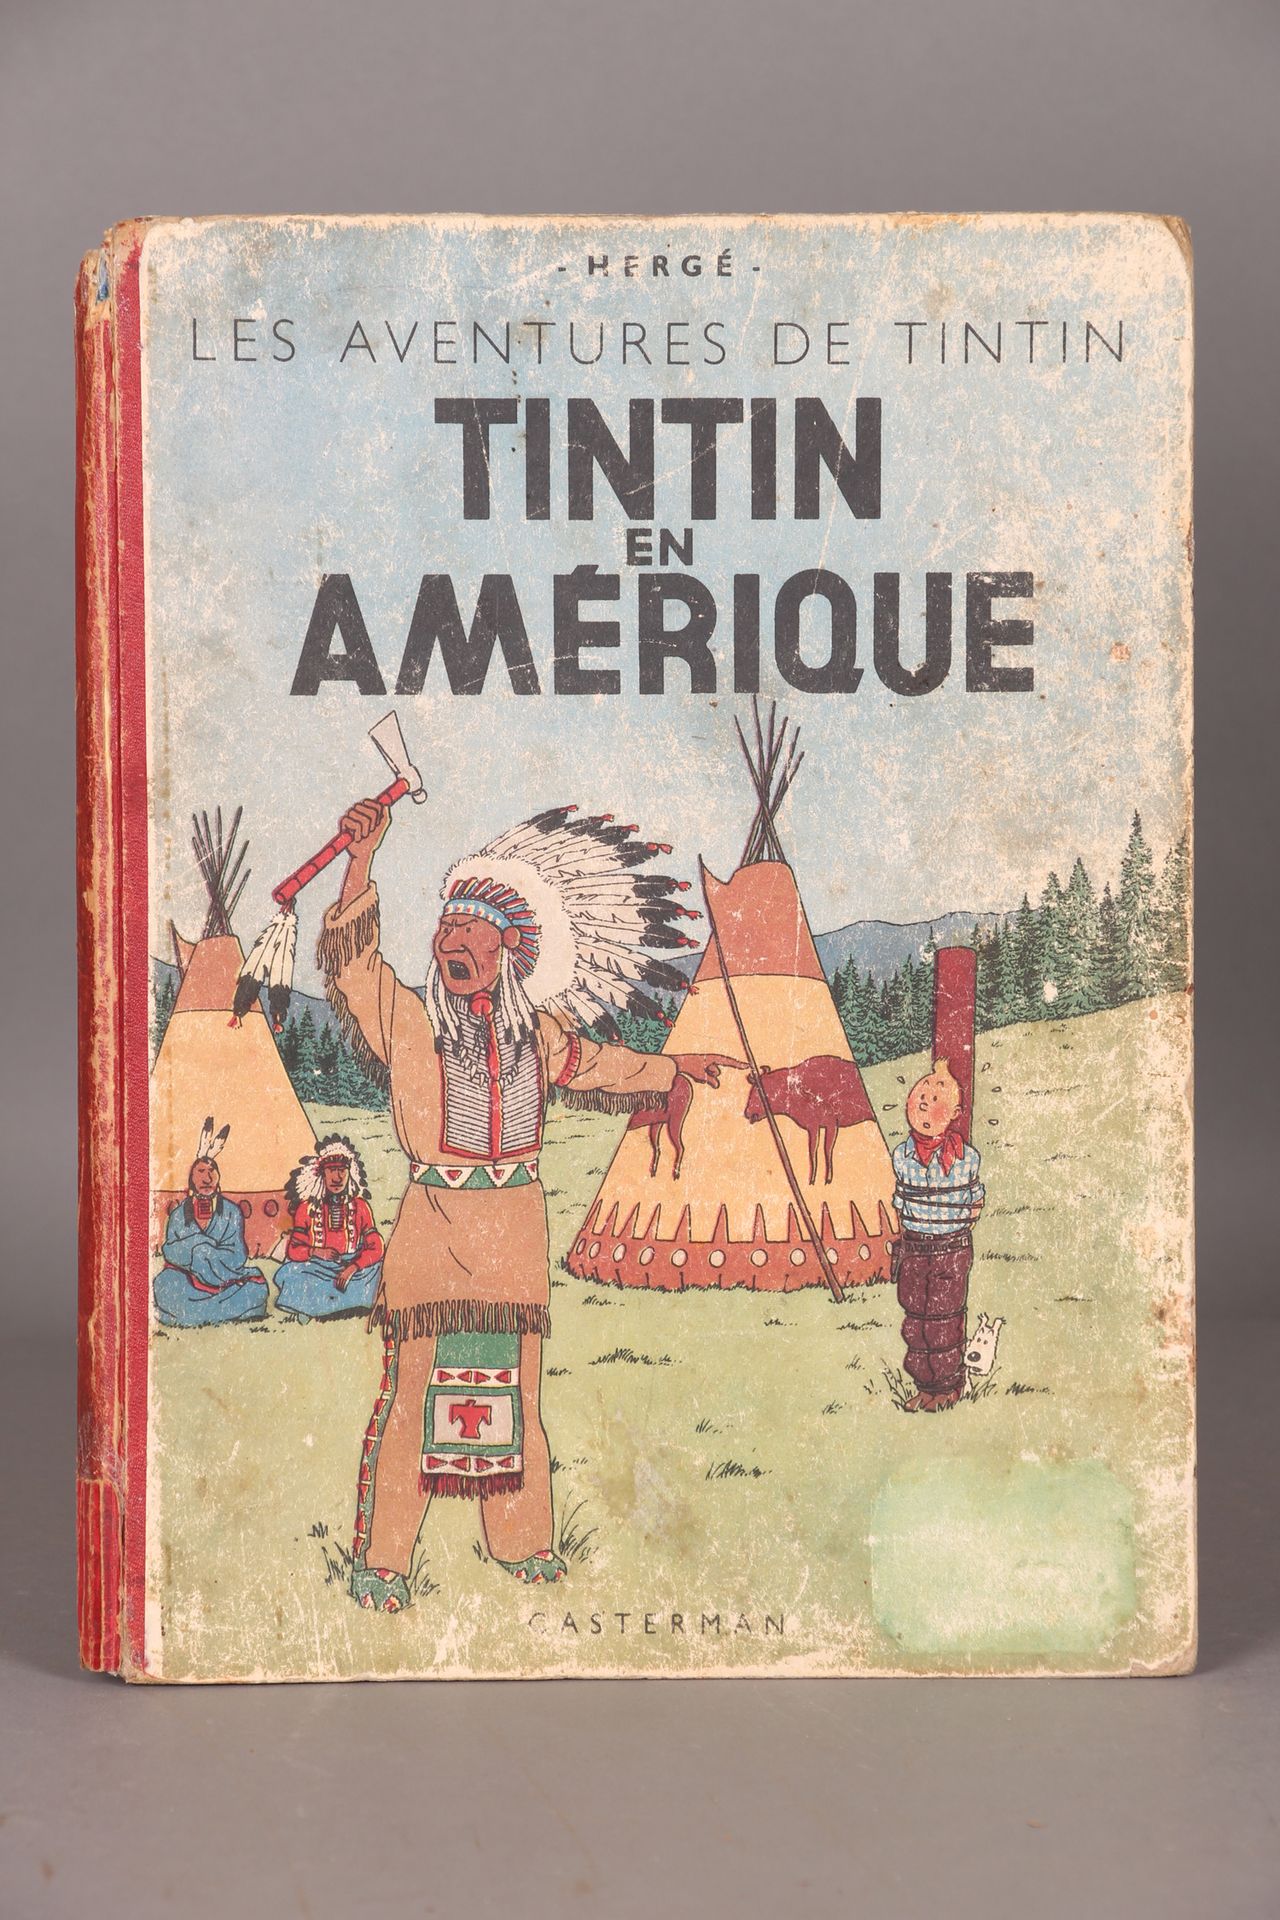 [TINTIN]. HERGÉ. "Tintin en Amérique" Casterman, 1942. Black and white edition. &hellip;